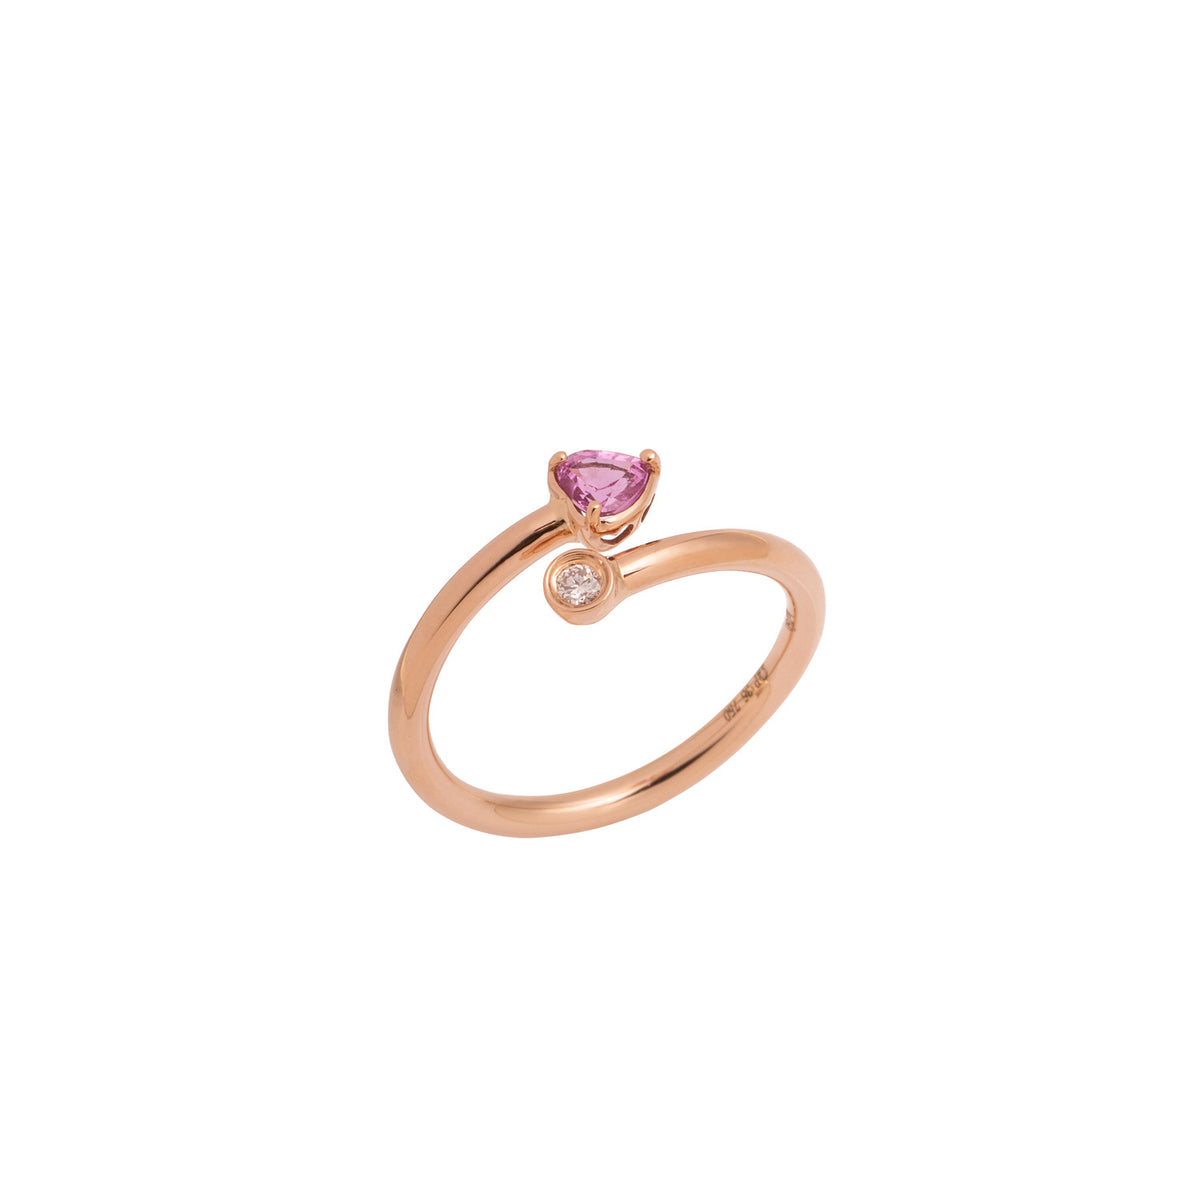 Gold Ring. Diamond Ring. Fine Jewelry. Anatol Jewelry. Kifissia. Golden Hall. Athens. Diamond Jewelry. Χρυσά κοσμήματα. Χρυσά δαχτυλίδια. Κοσμήματα Κηφισιά. Ανατολ. Δαχτυλίδι με διαμάντια. Pink sapphire heart ring. Sapphire heart ring. Heart Ring.